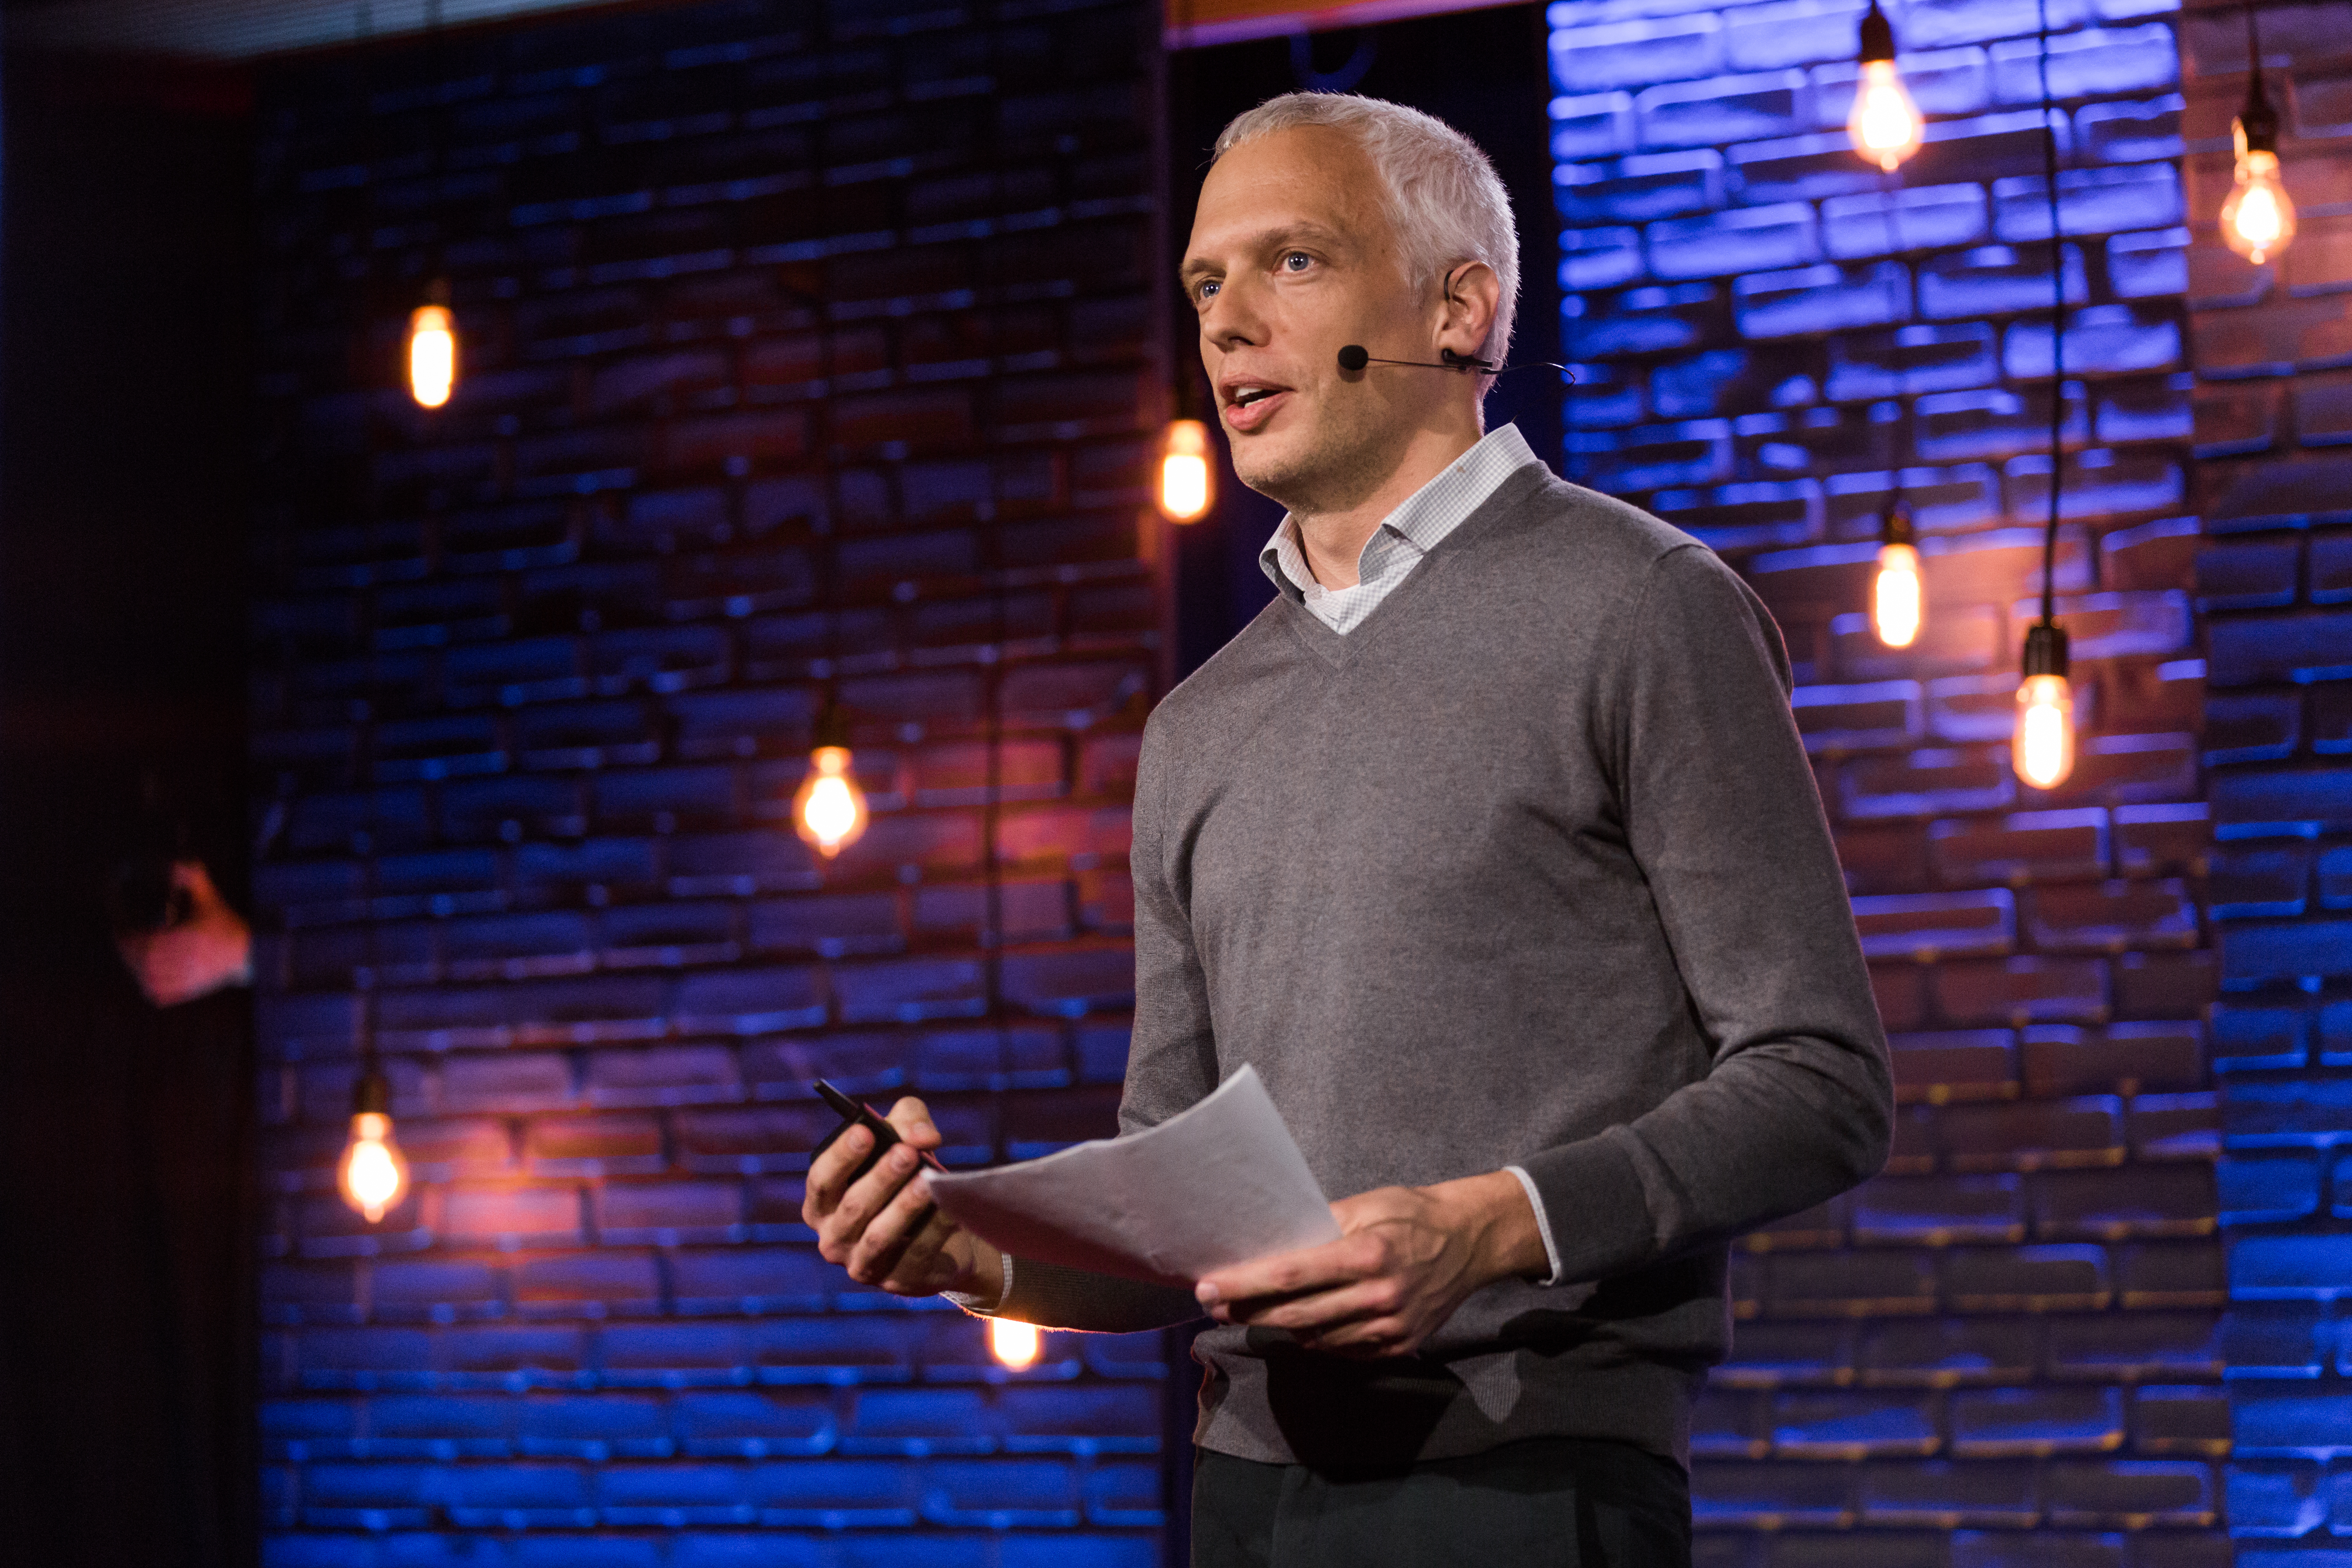 Ryan Gravel speaks at TEDNYC -What Drives Us, October 5, 2016, New York, NY. Photo: Ryan Lash / TED